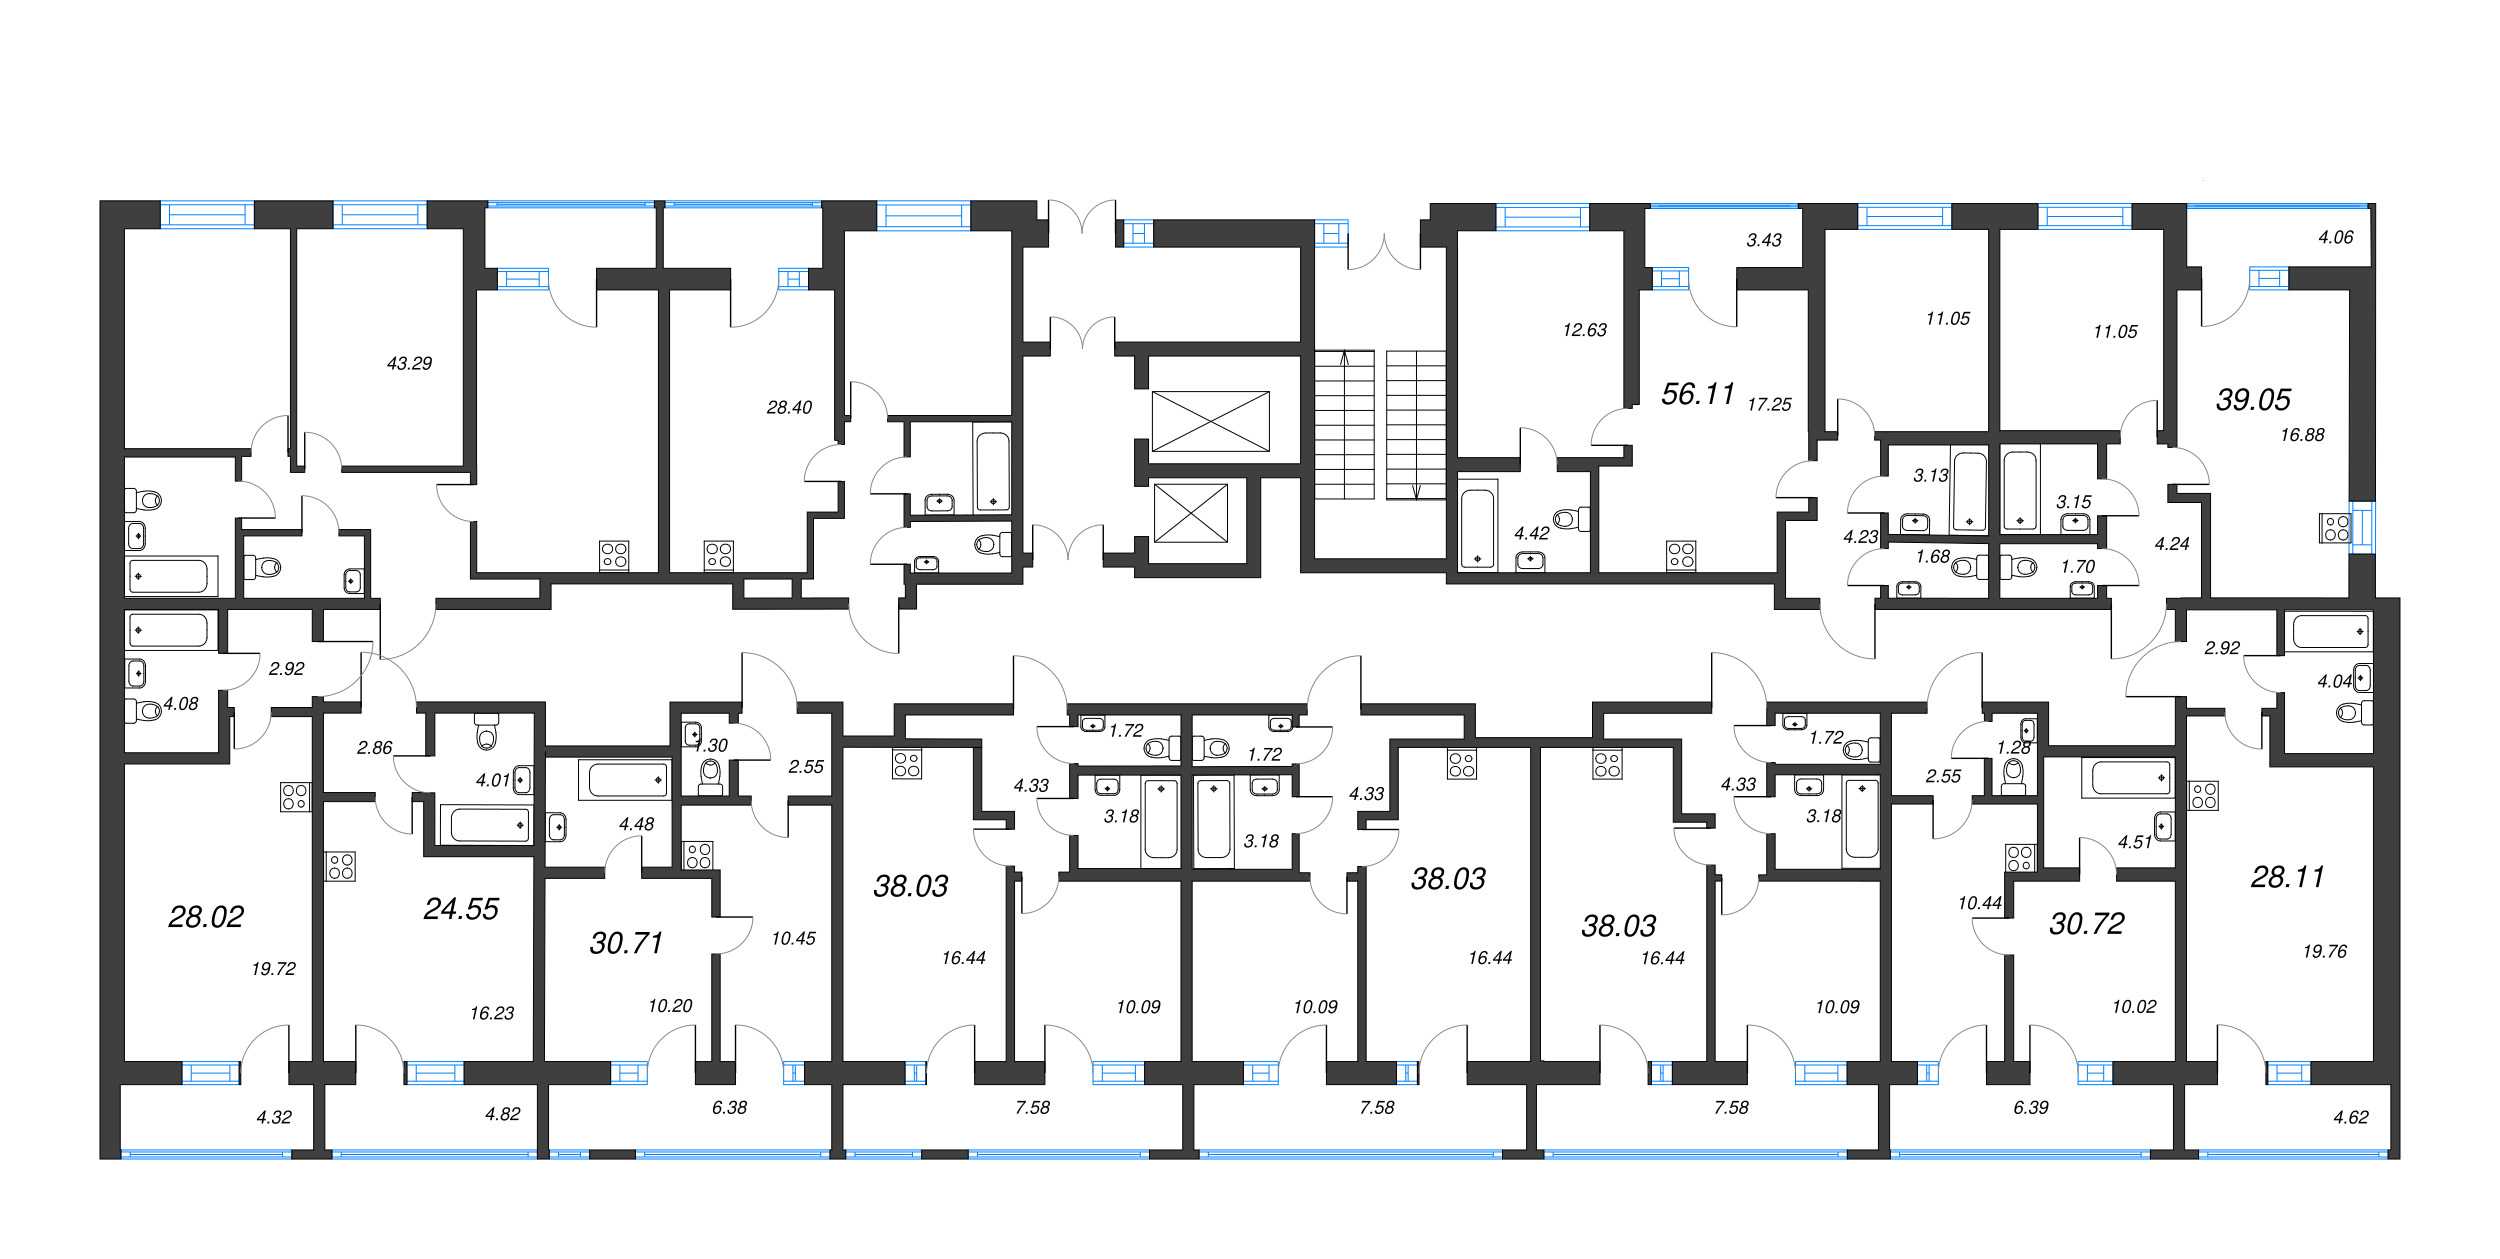 2-комнатная (Евро) квартира, 38.03 м² в ЖК "Искра-Сити" - планировка этажа